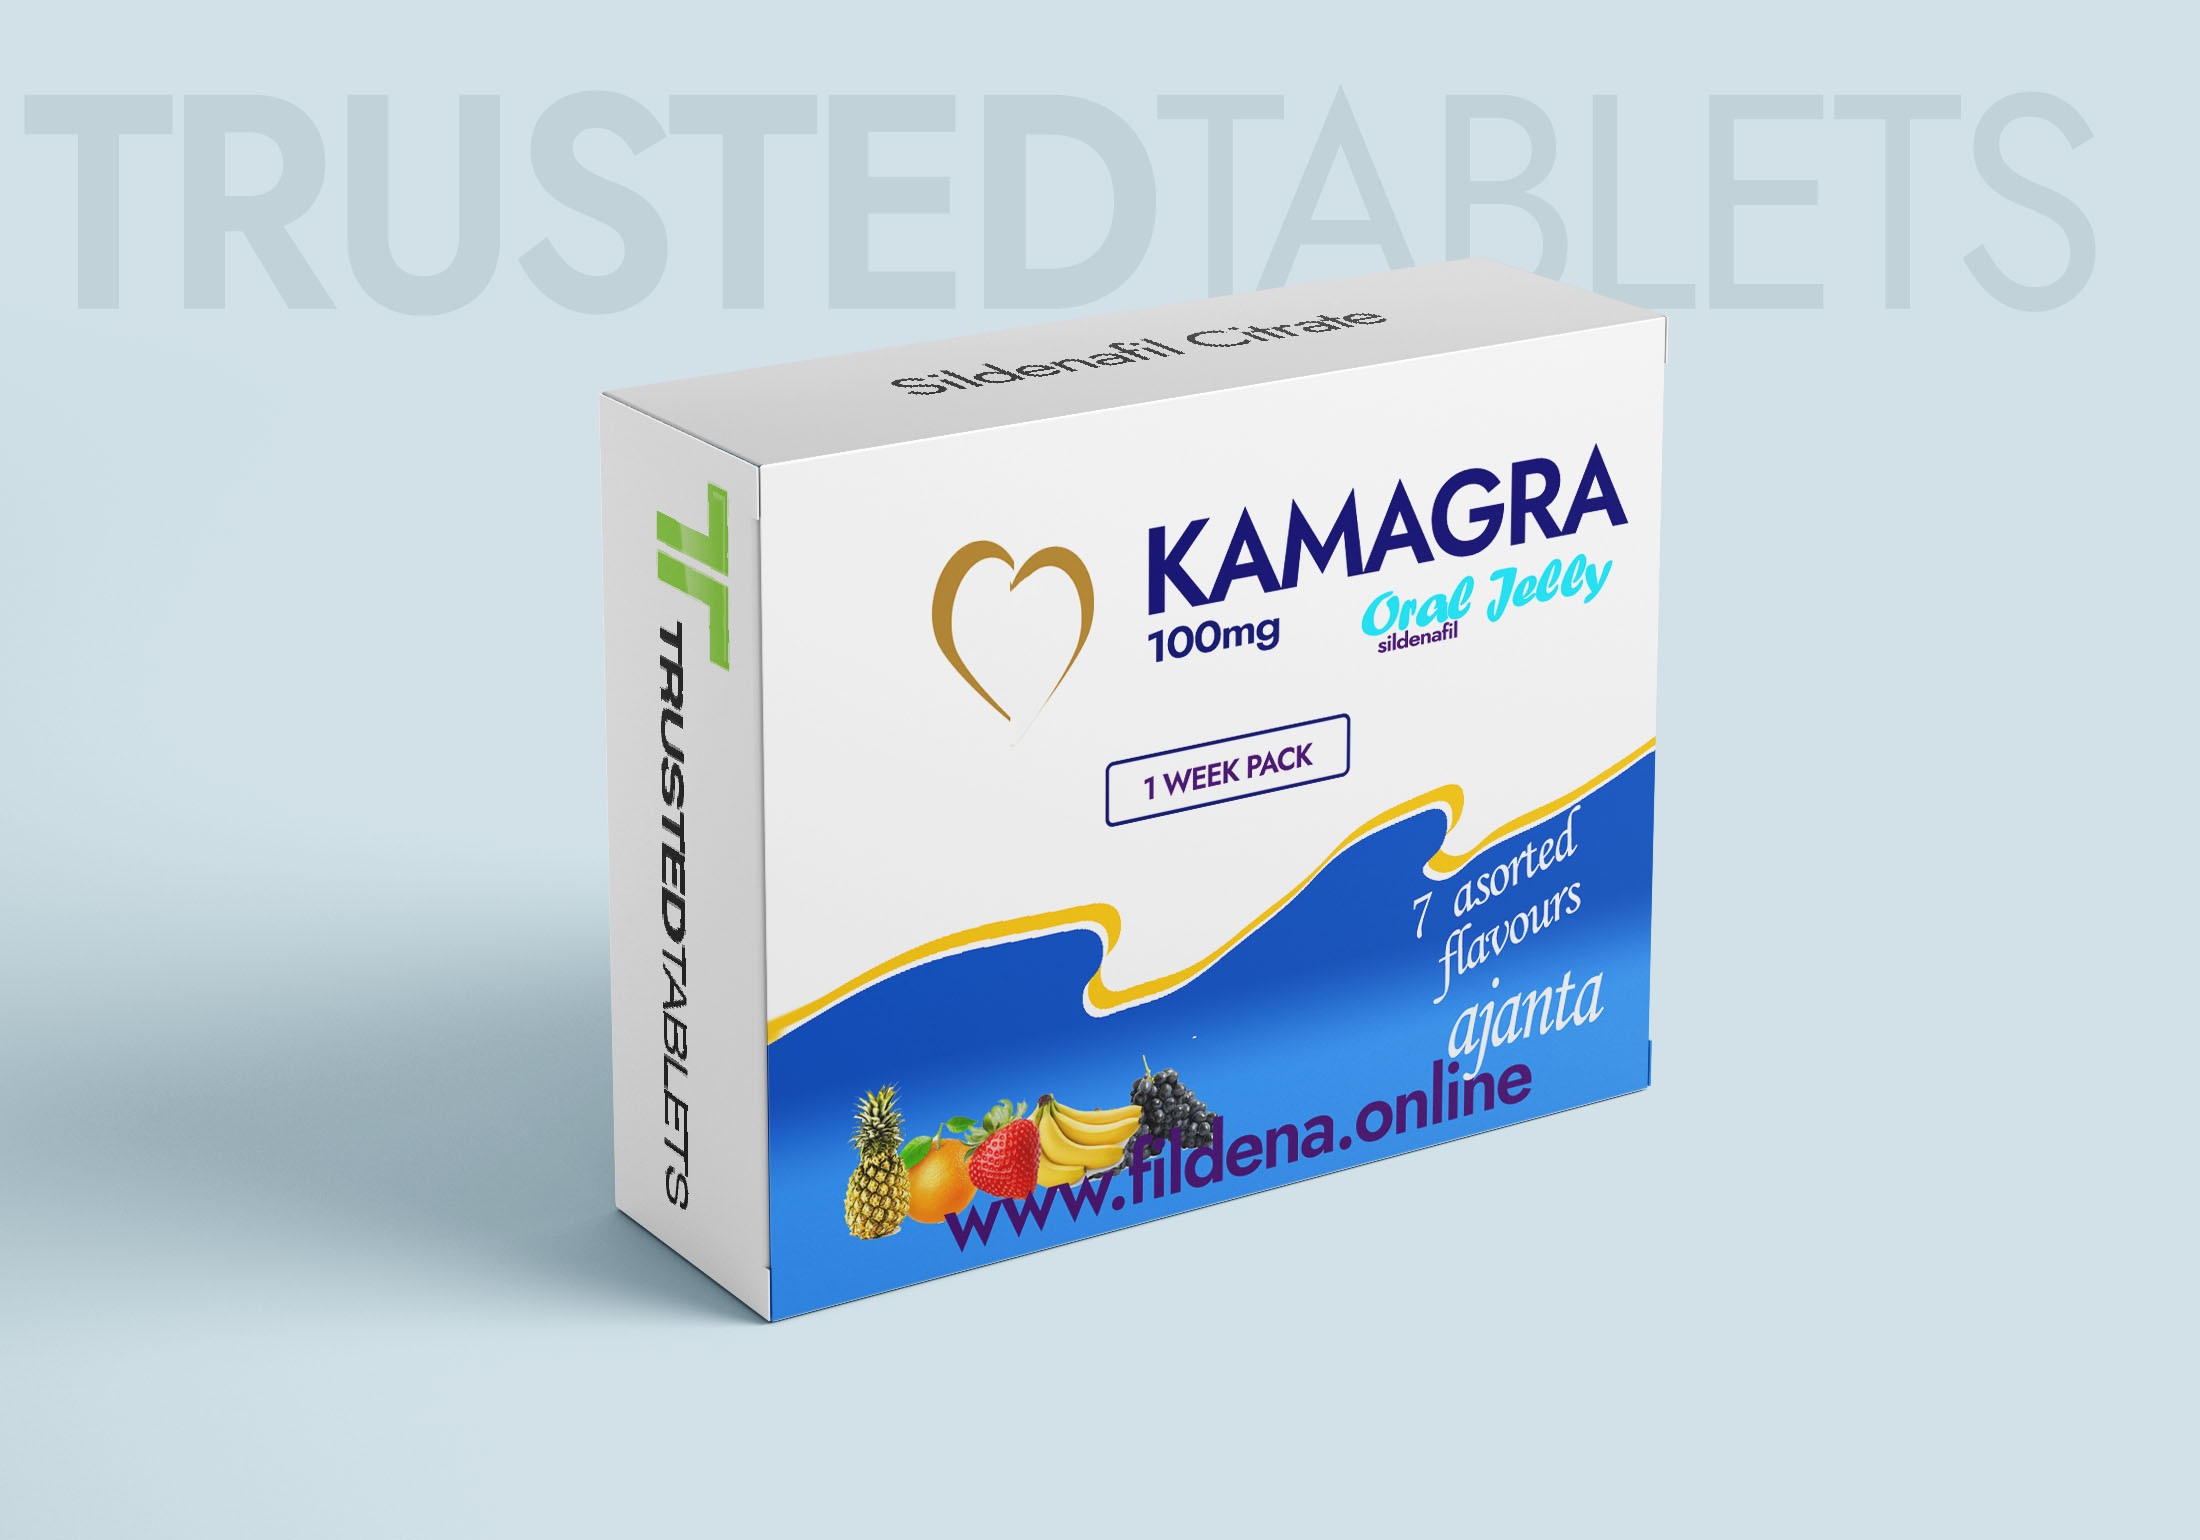 Kamagra Oral Jelly TrustedTablets